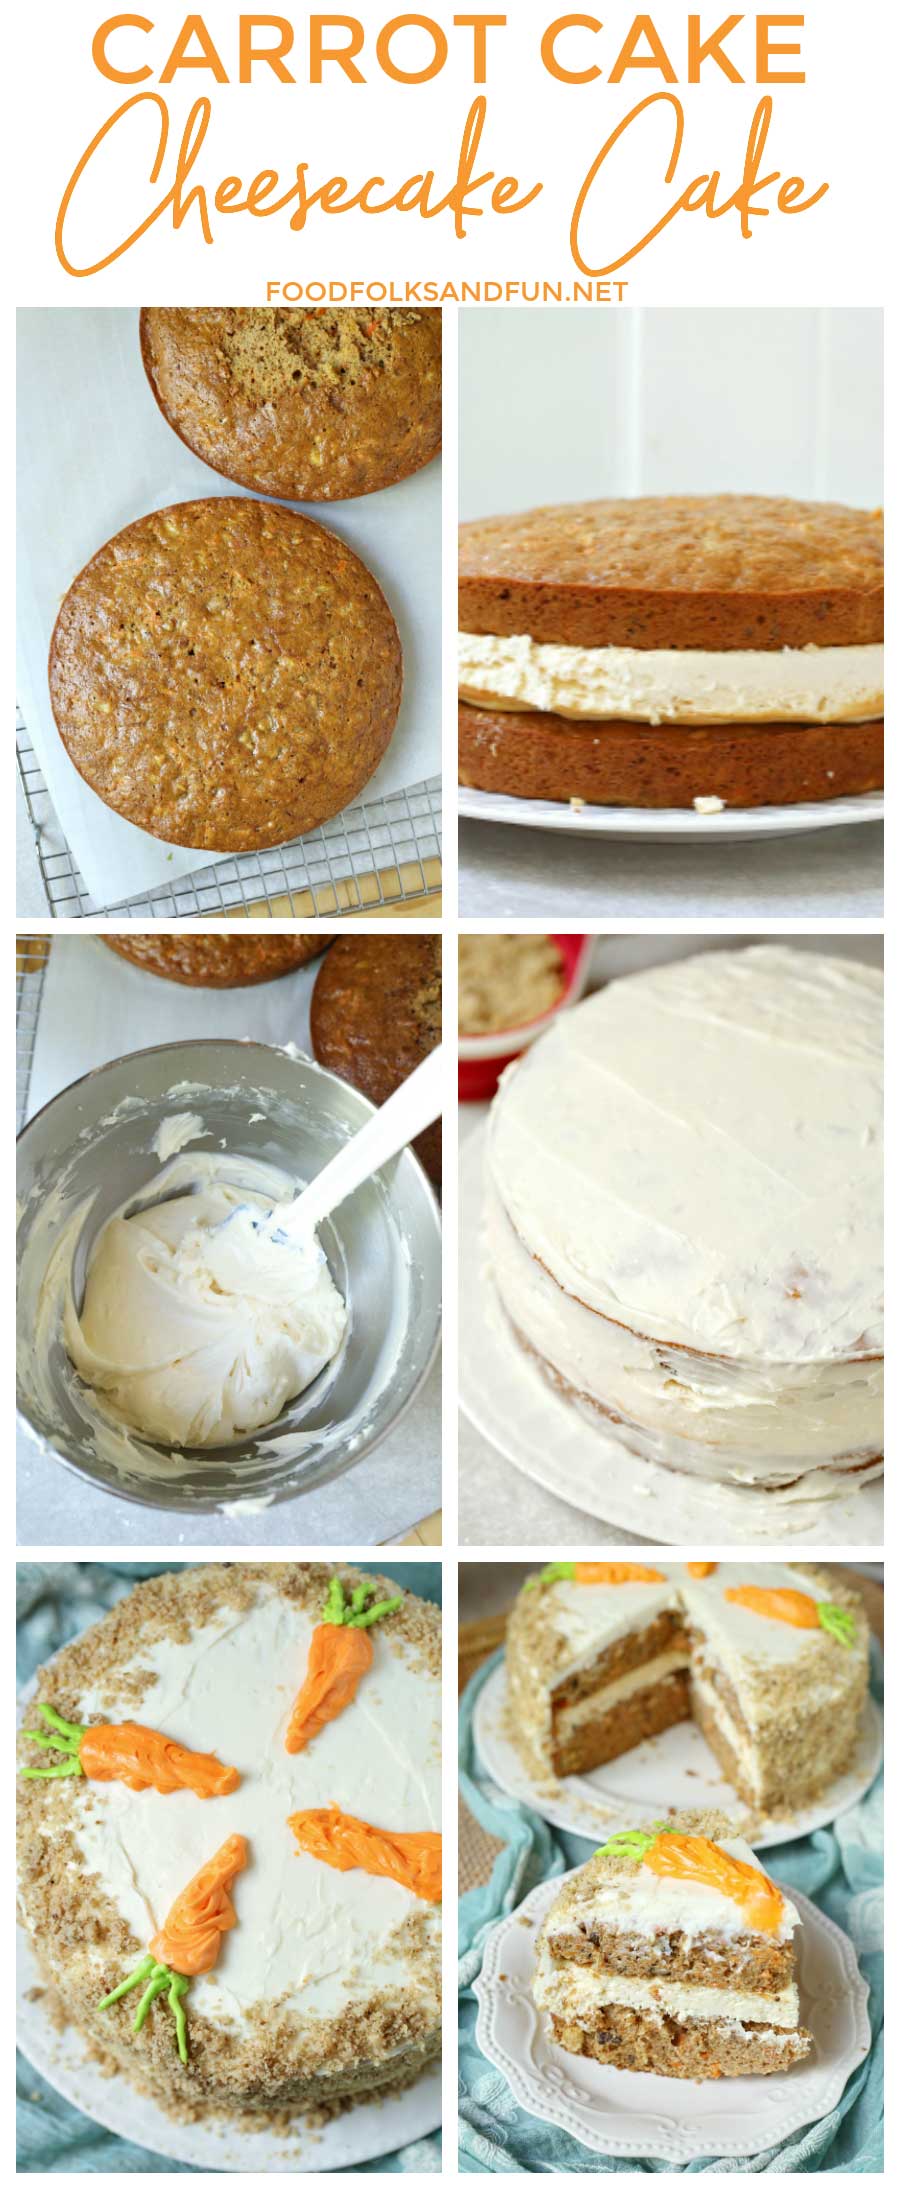 How to make Carrot Cake Cheesecake Cake with recipe video!